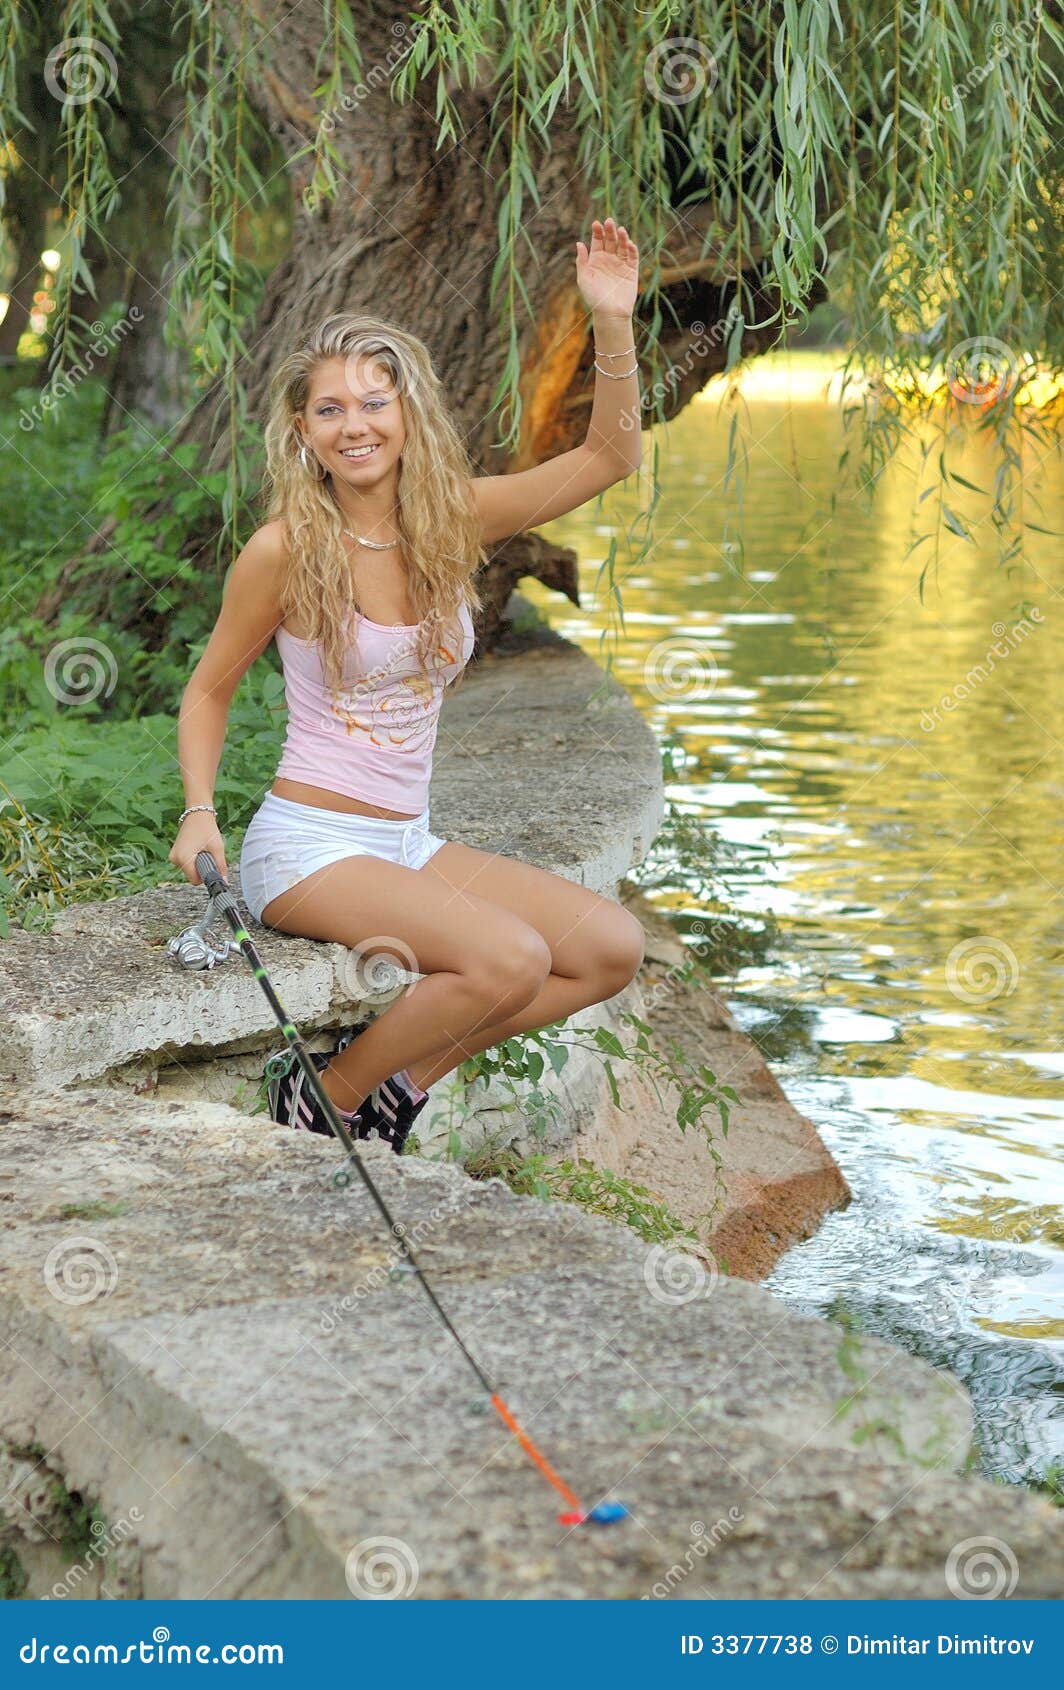 cara salerno share woman pretty woman fishing photos